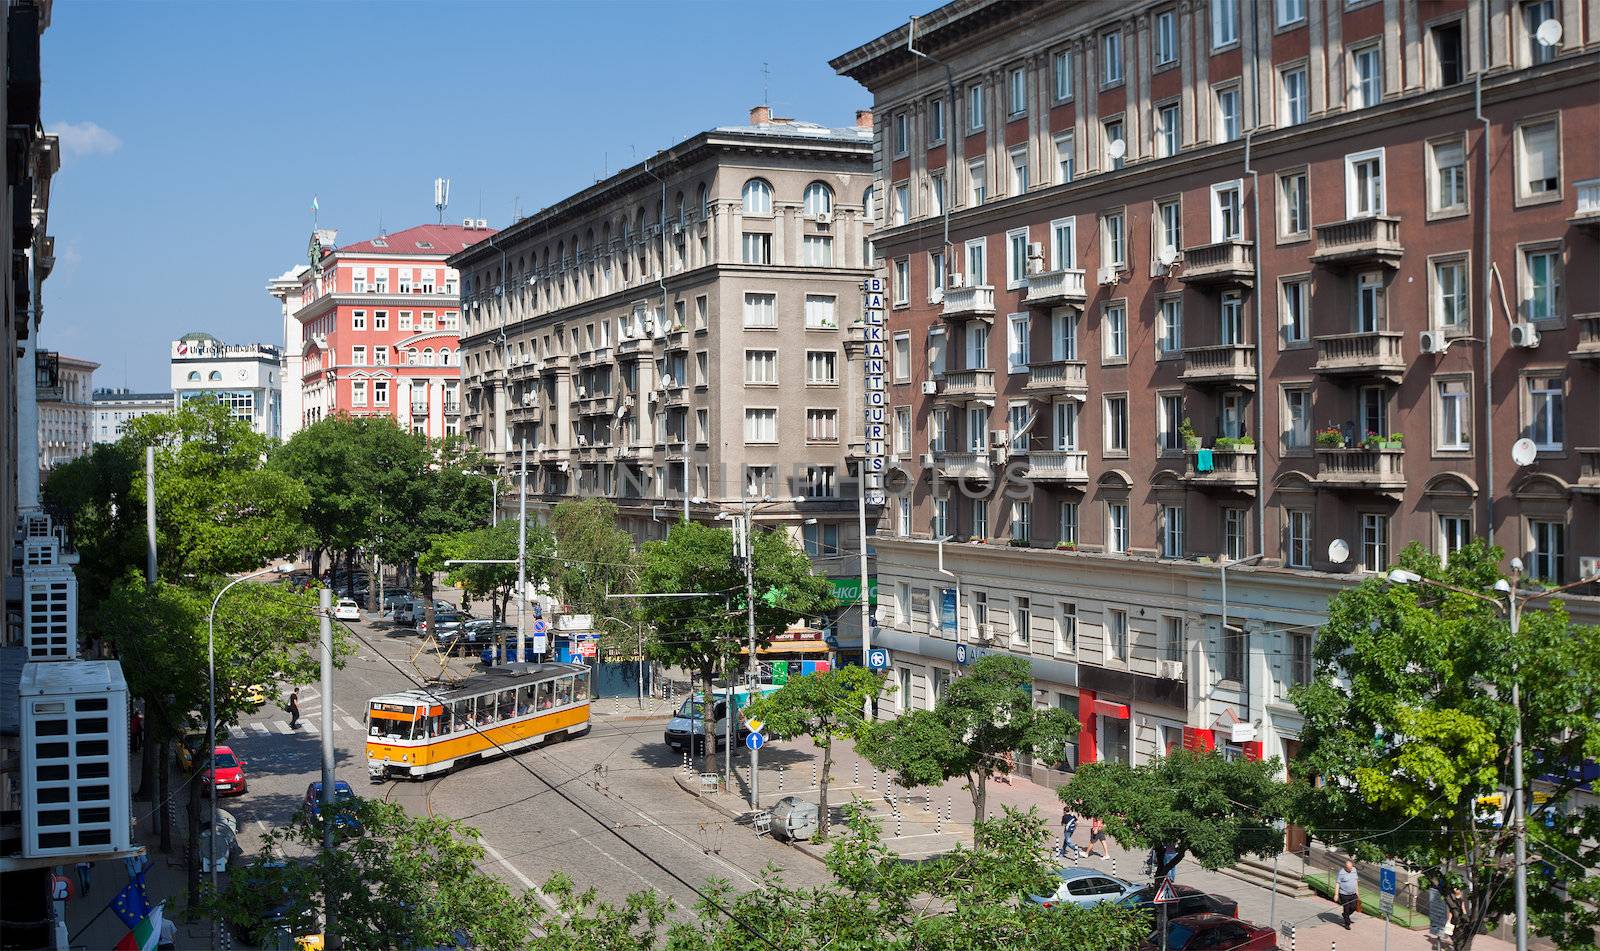 SOFIA, BULGARIA - JUNE 25: General street view of "General Dondukov" blv. with a tram in Sofia, Bulgaria - June 25, 2013 .